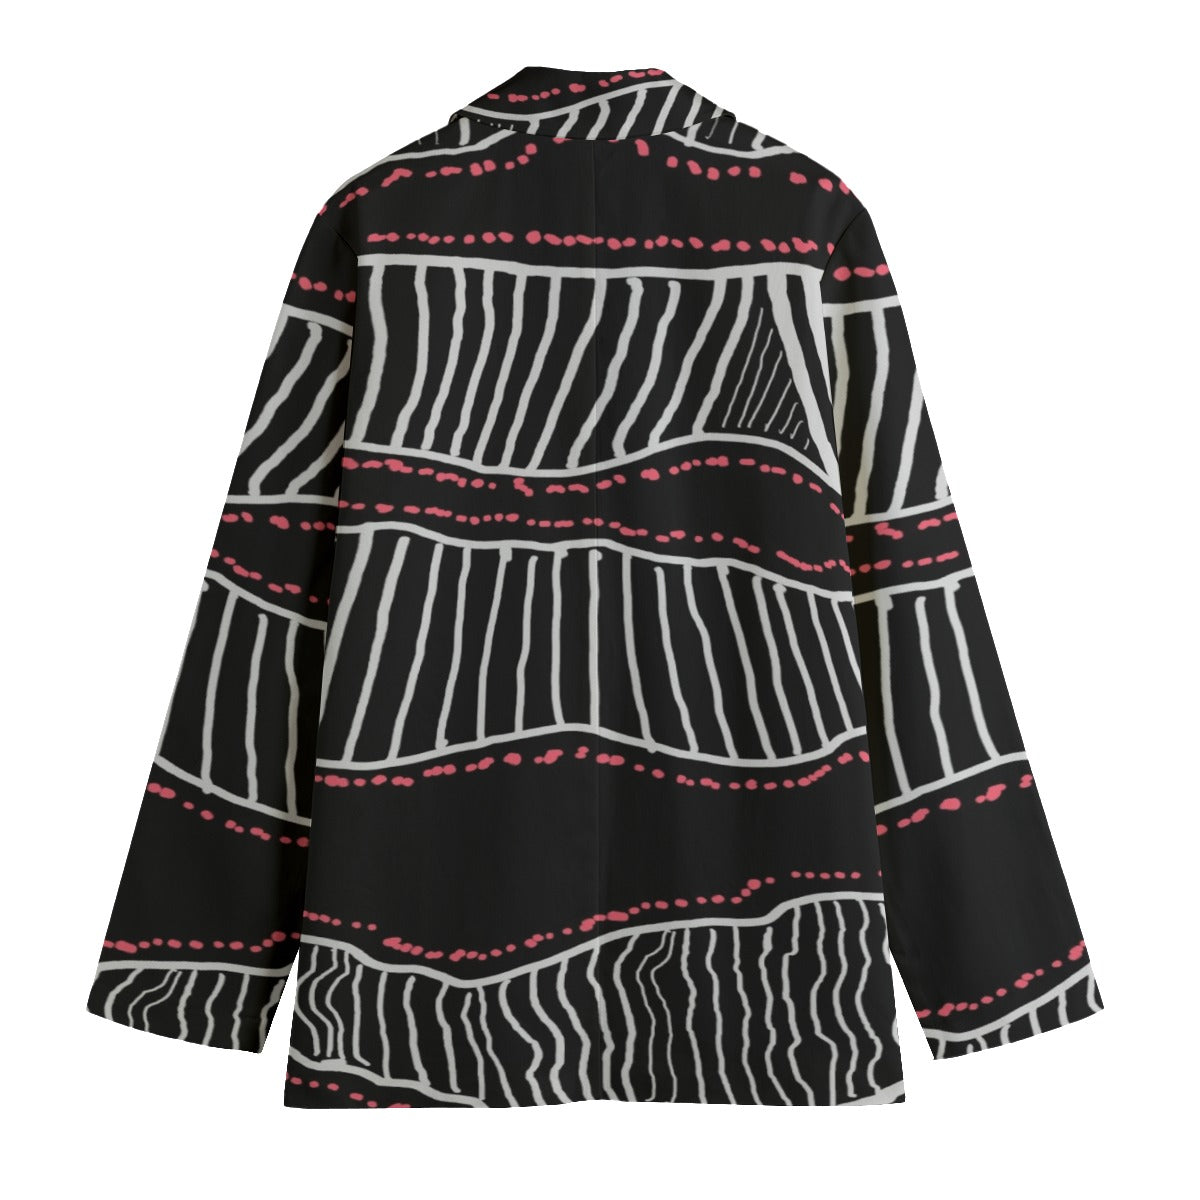 Elders Knowledge Women's Cotton Jacket By Koori Threads